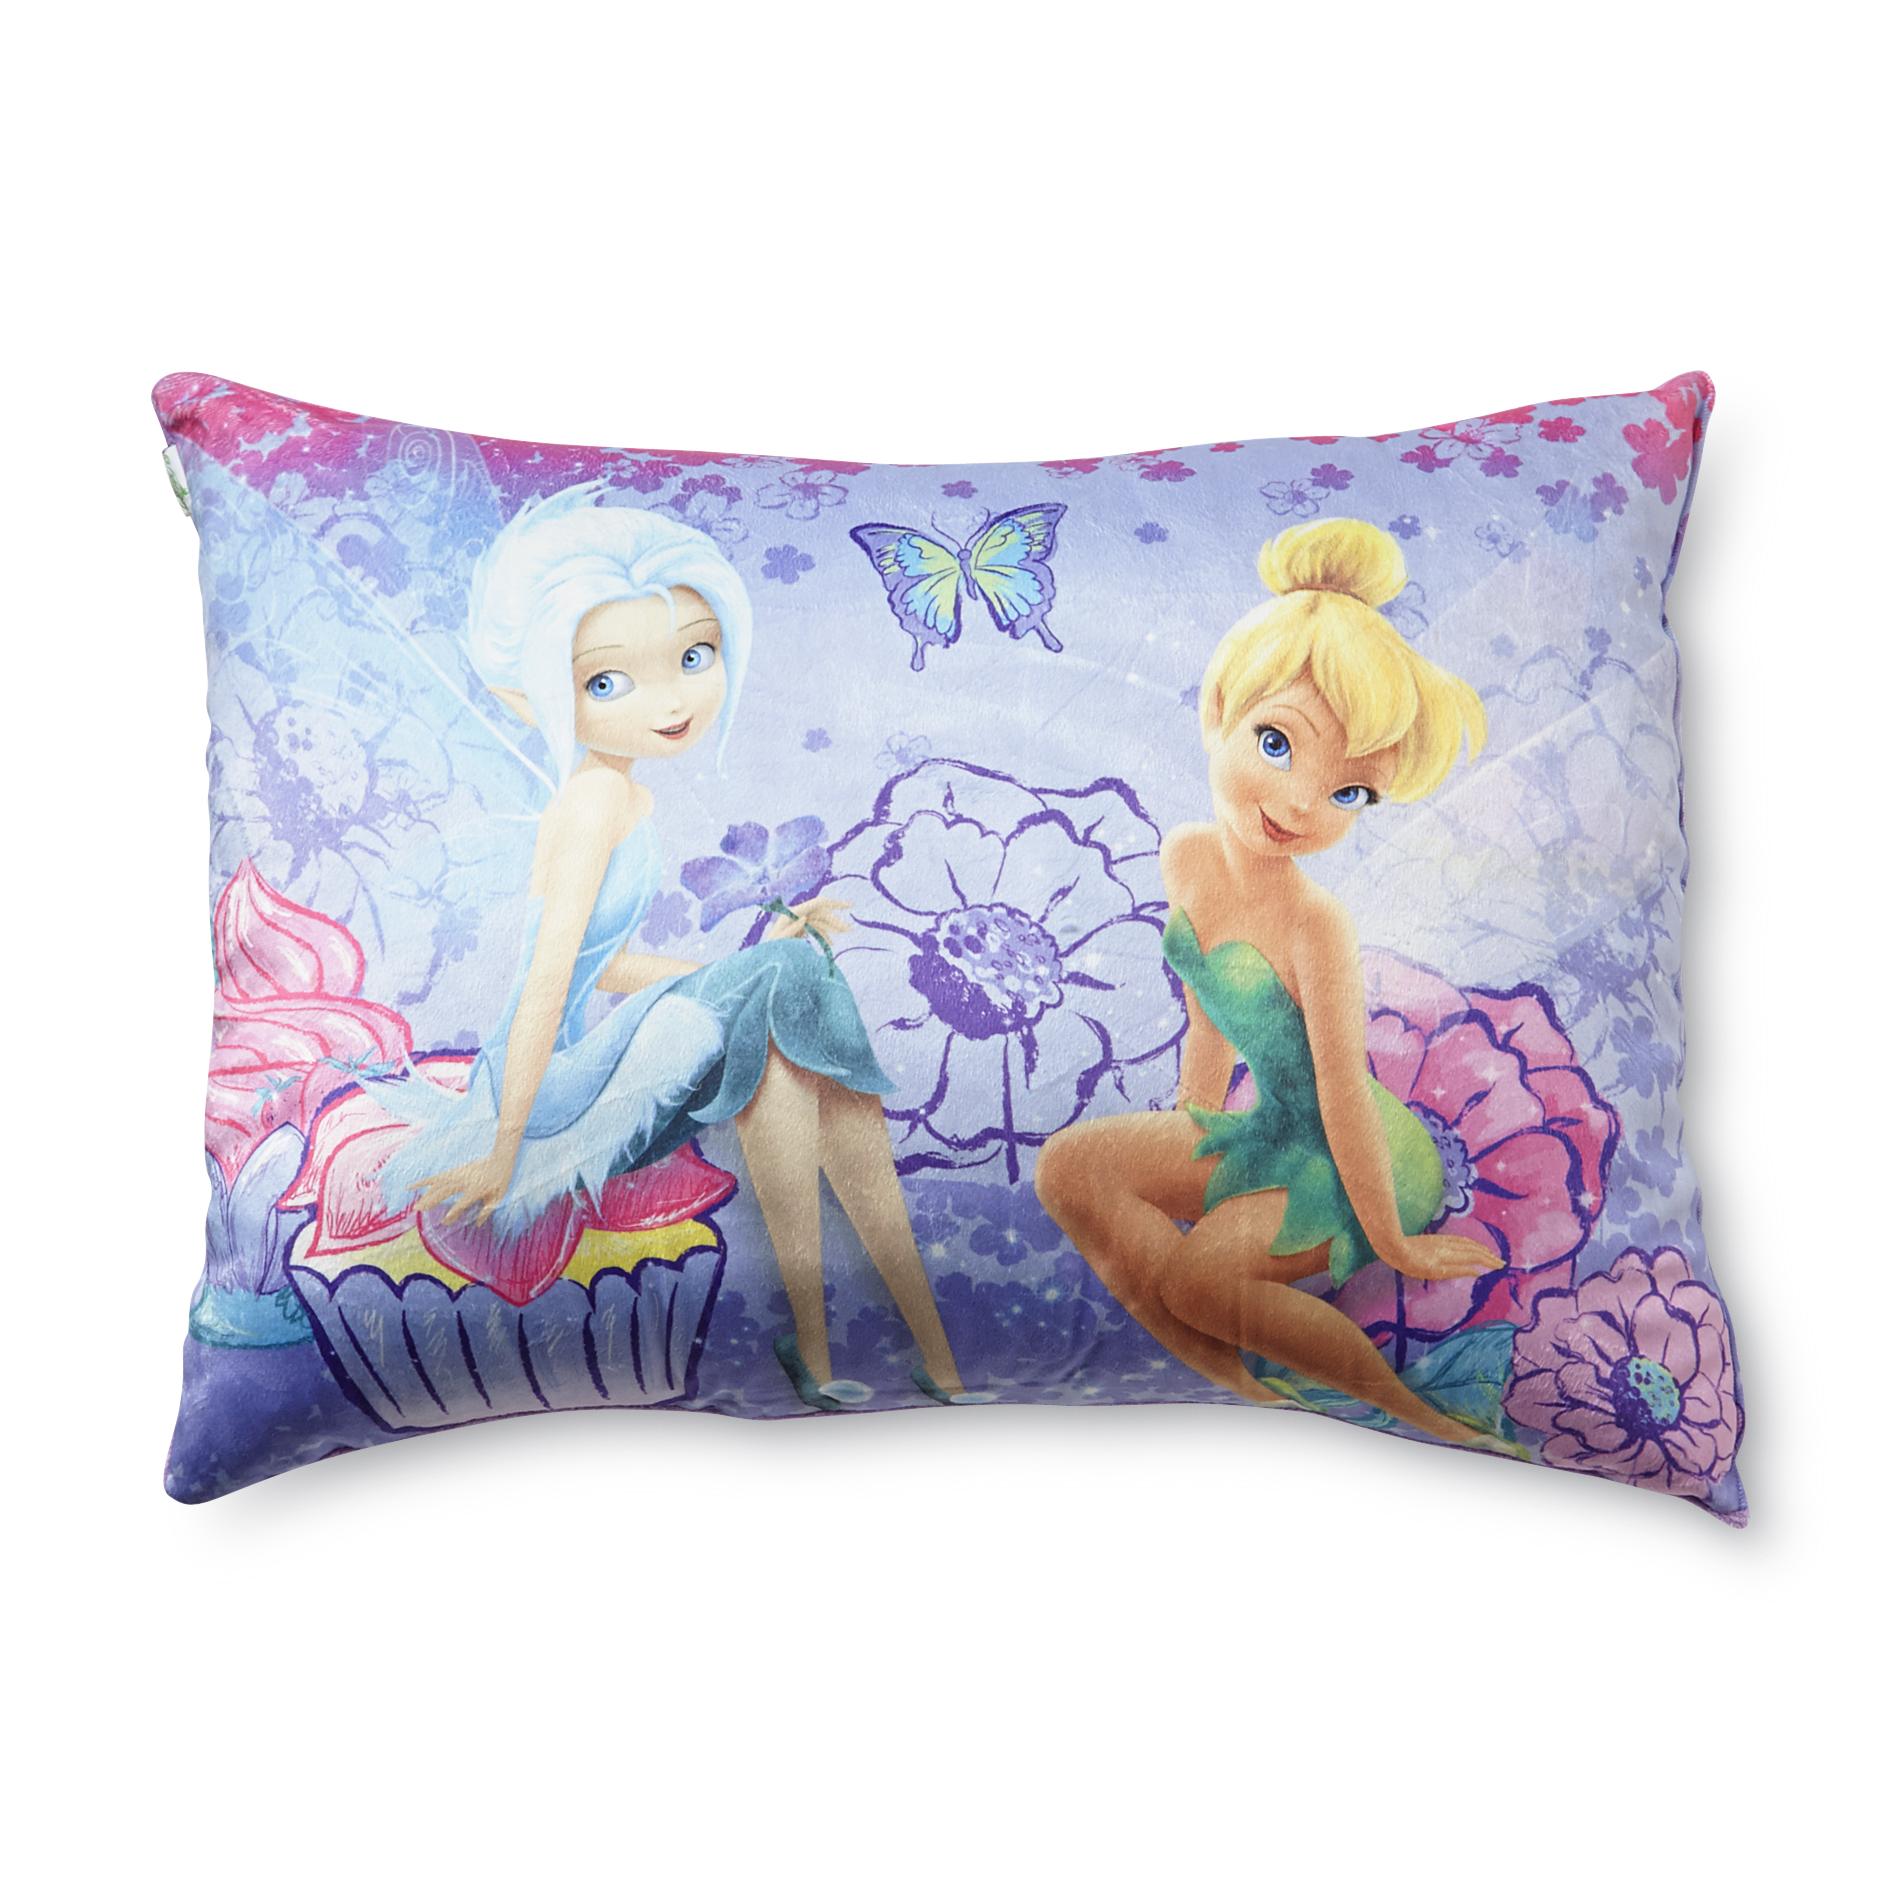 Little Mermaid Round Decorative Pillow Disney Room Decor